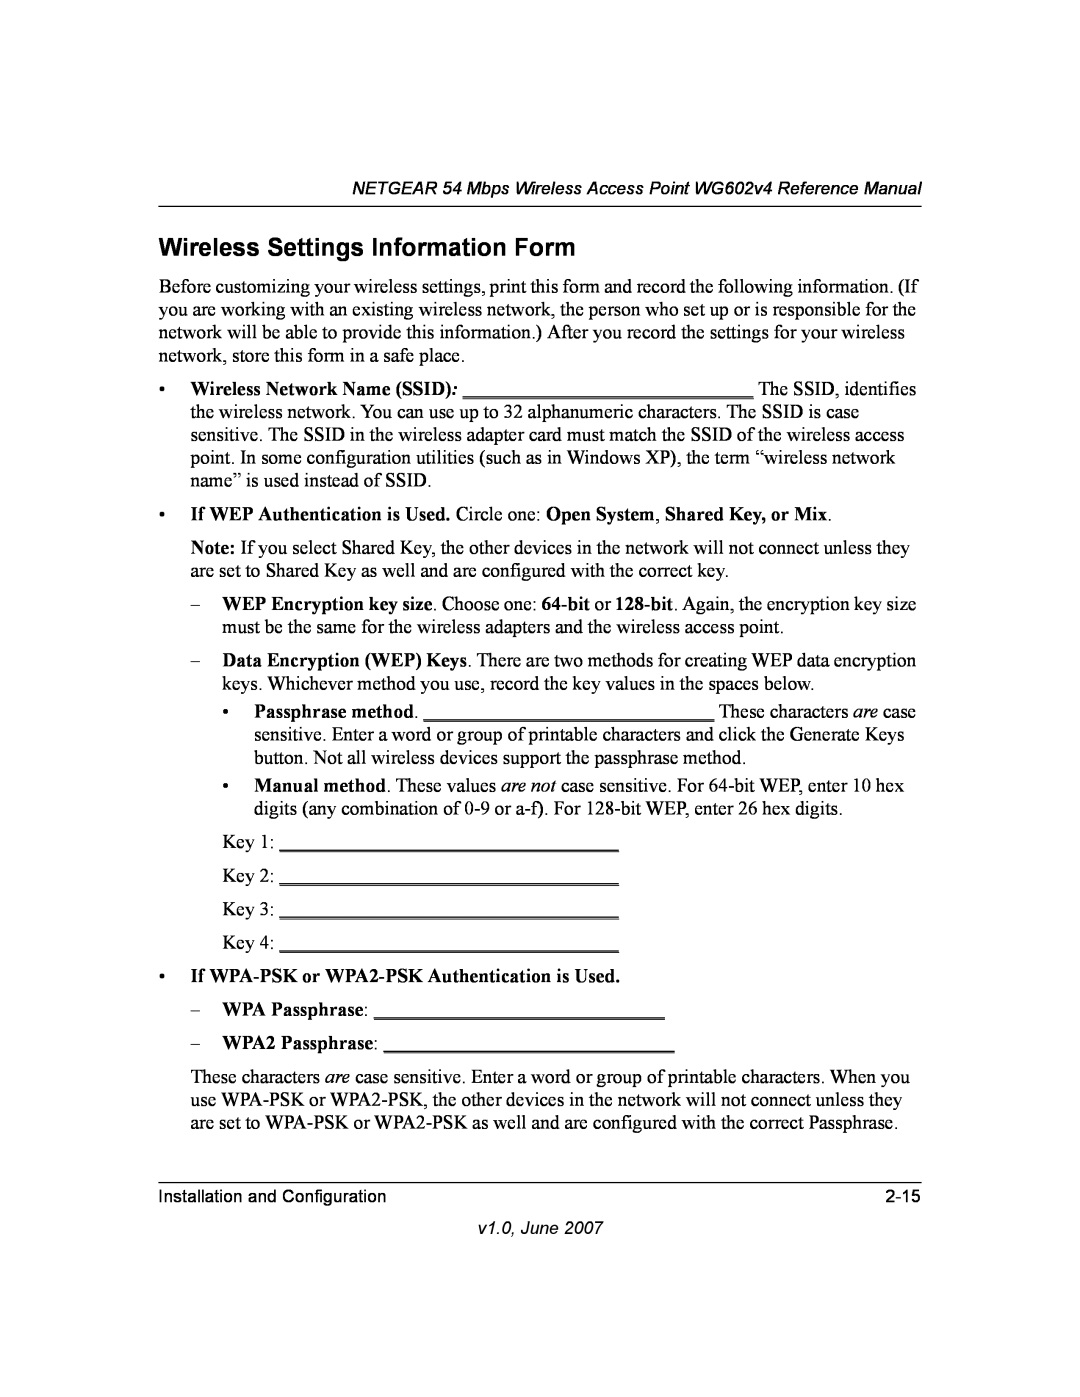 NETGEAR WG602V4 manual Wireless Settings Information Form, If WPA-PSK or WPA2-PSK Authentication is Used 